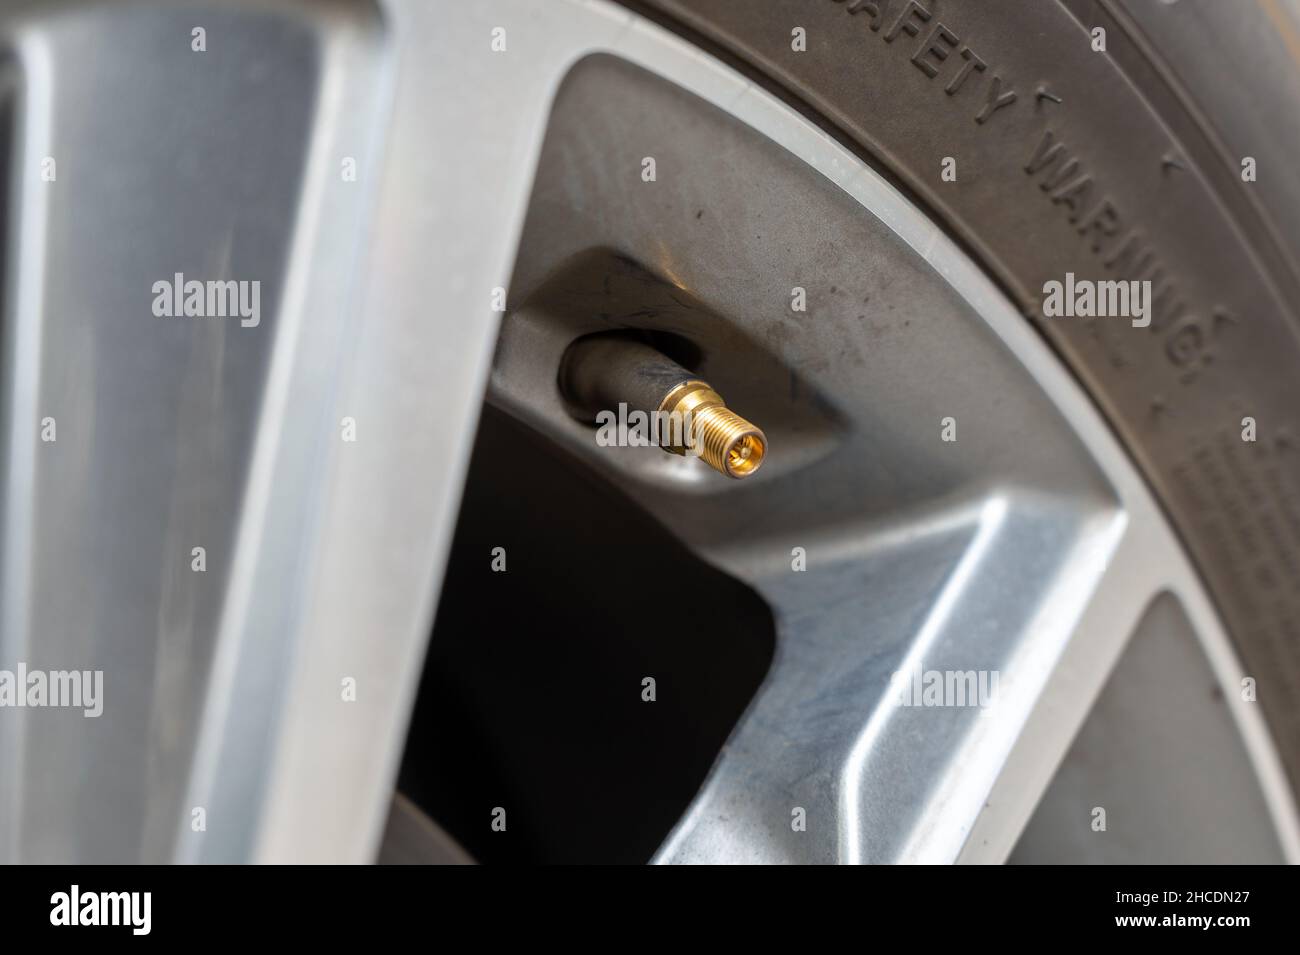 Air valve of a car tire close-up. Stock Photo